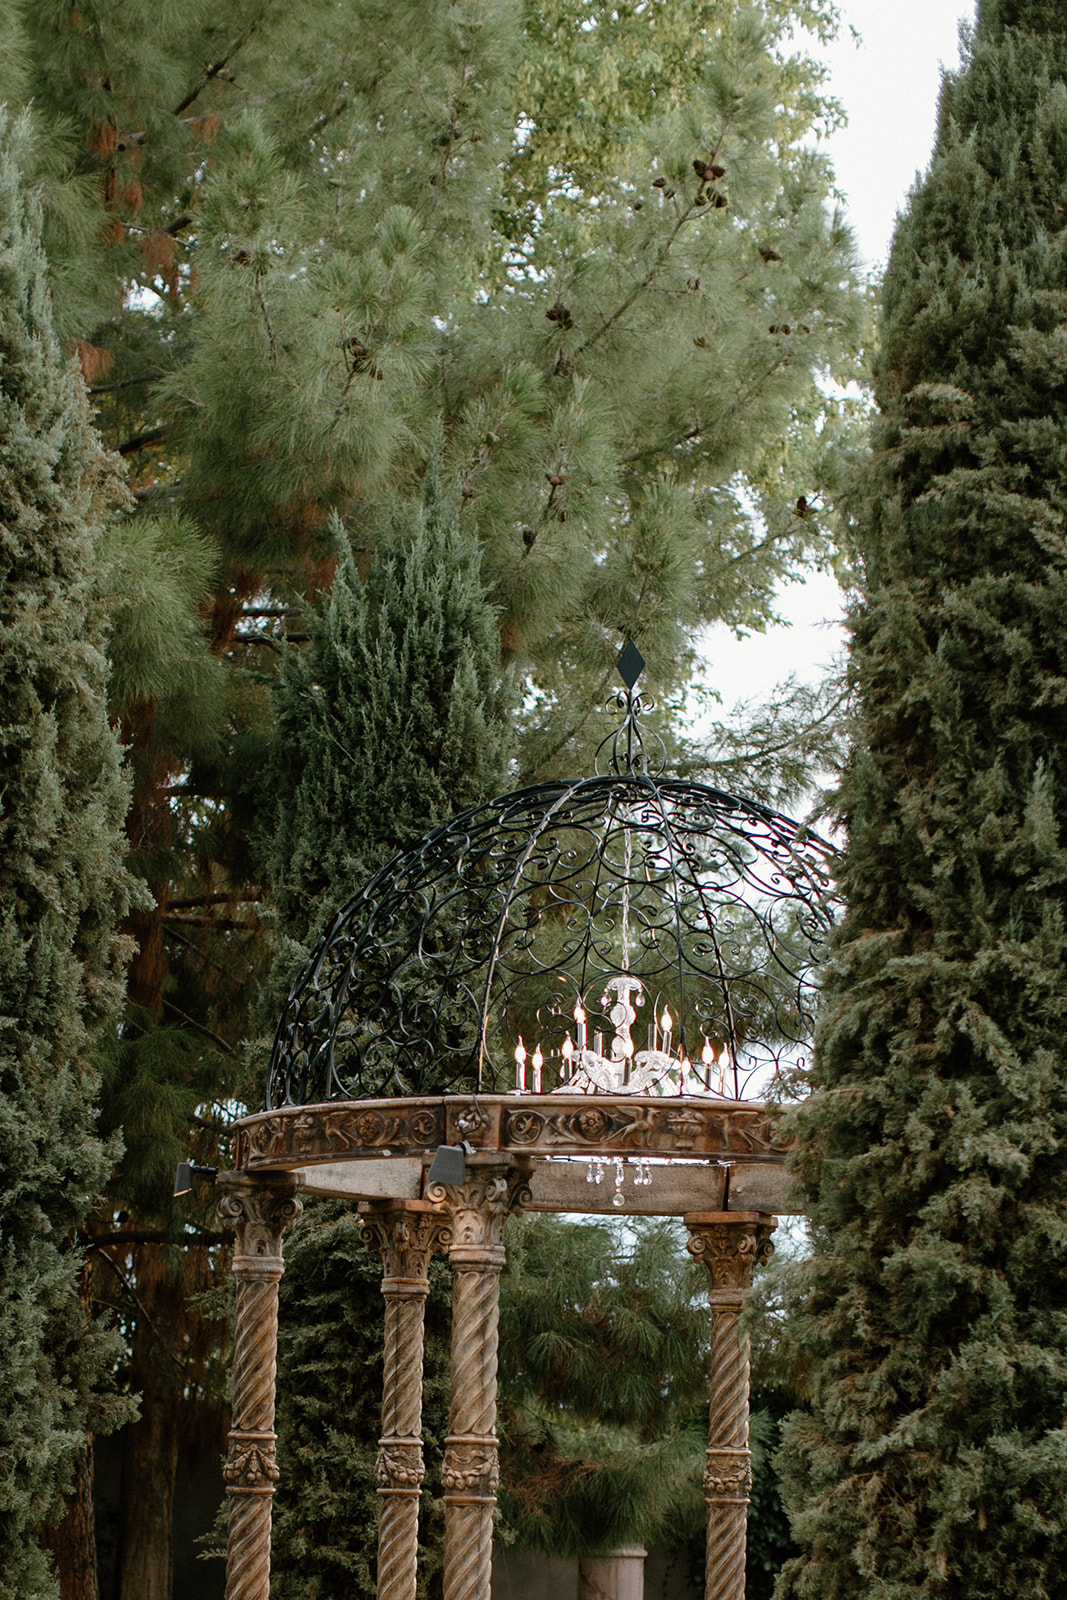 The Ashley Castle Arizona venue featuring sage wedding table setting